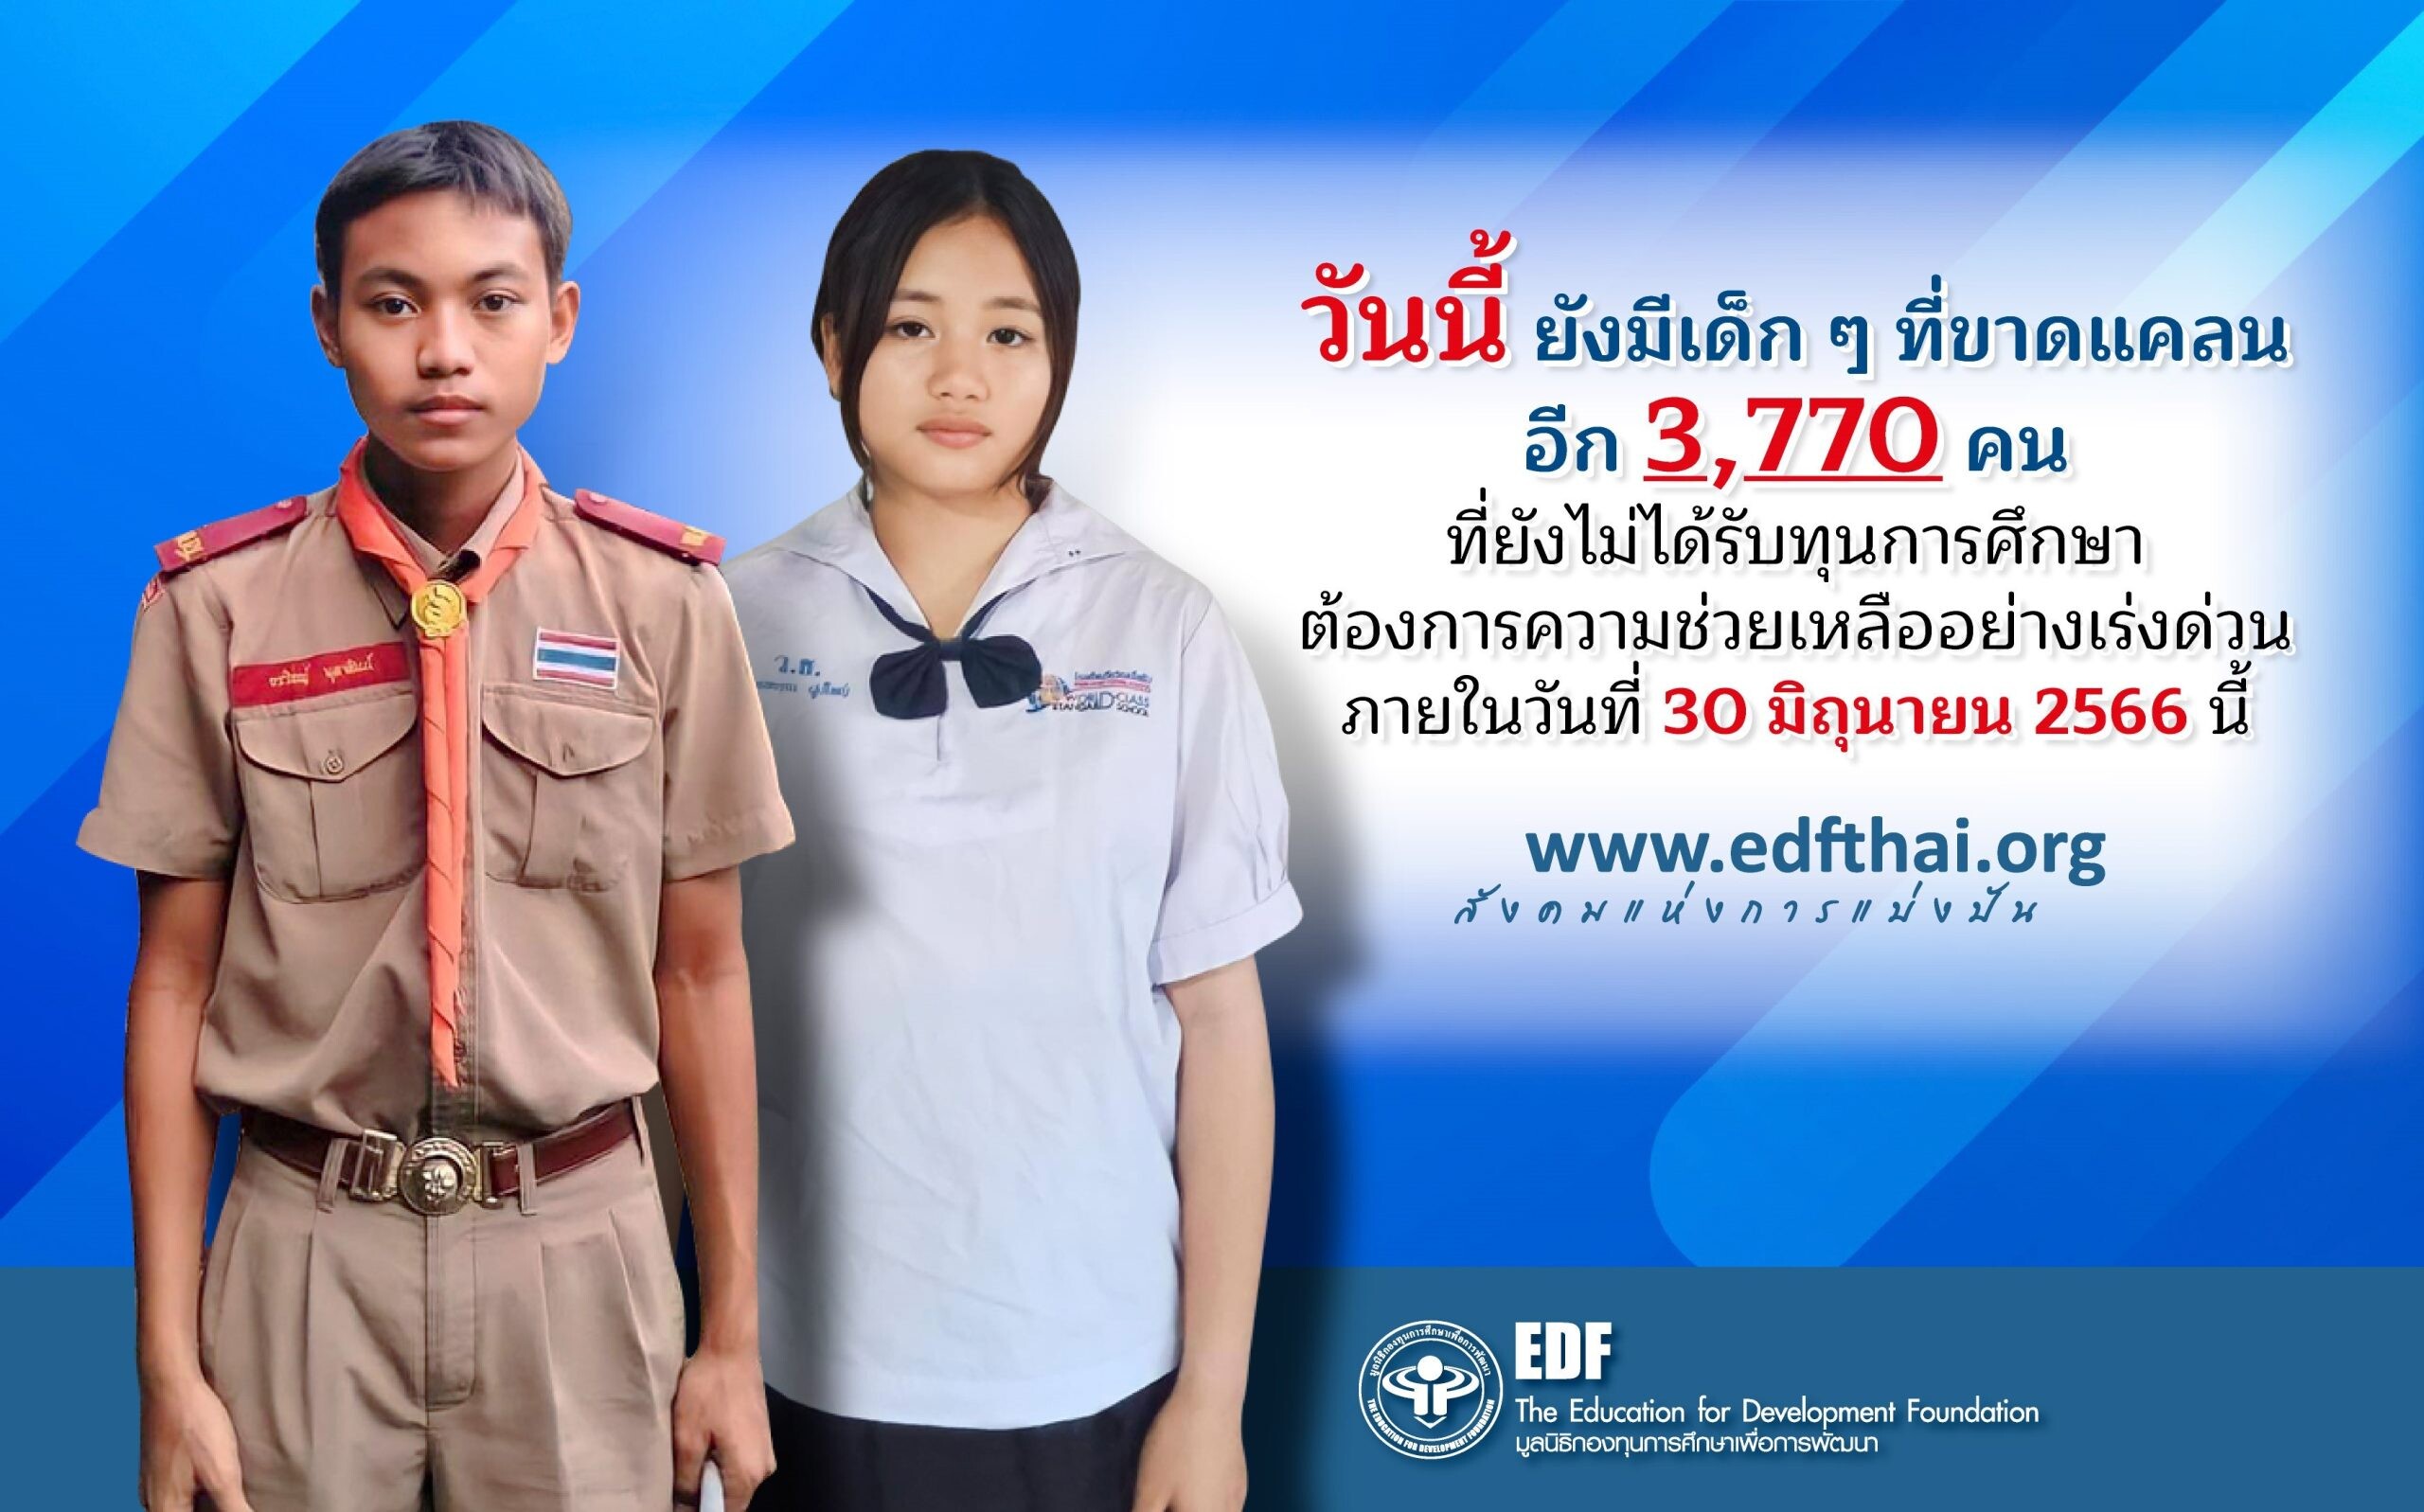 EDF Foundation invites general public to support needy Thai students education